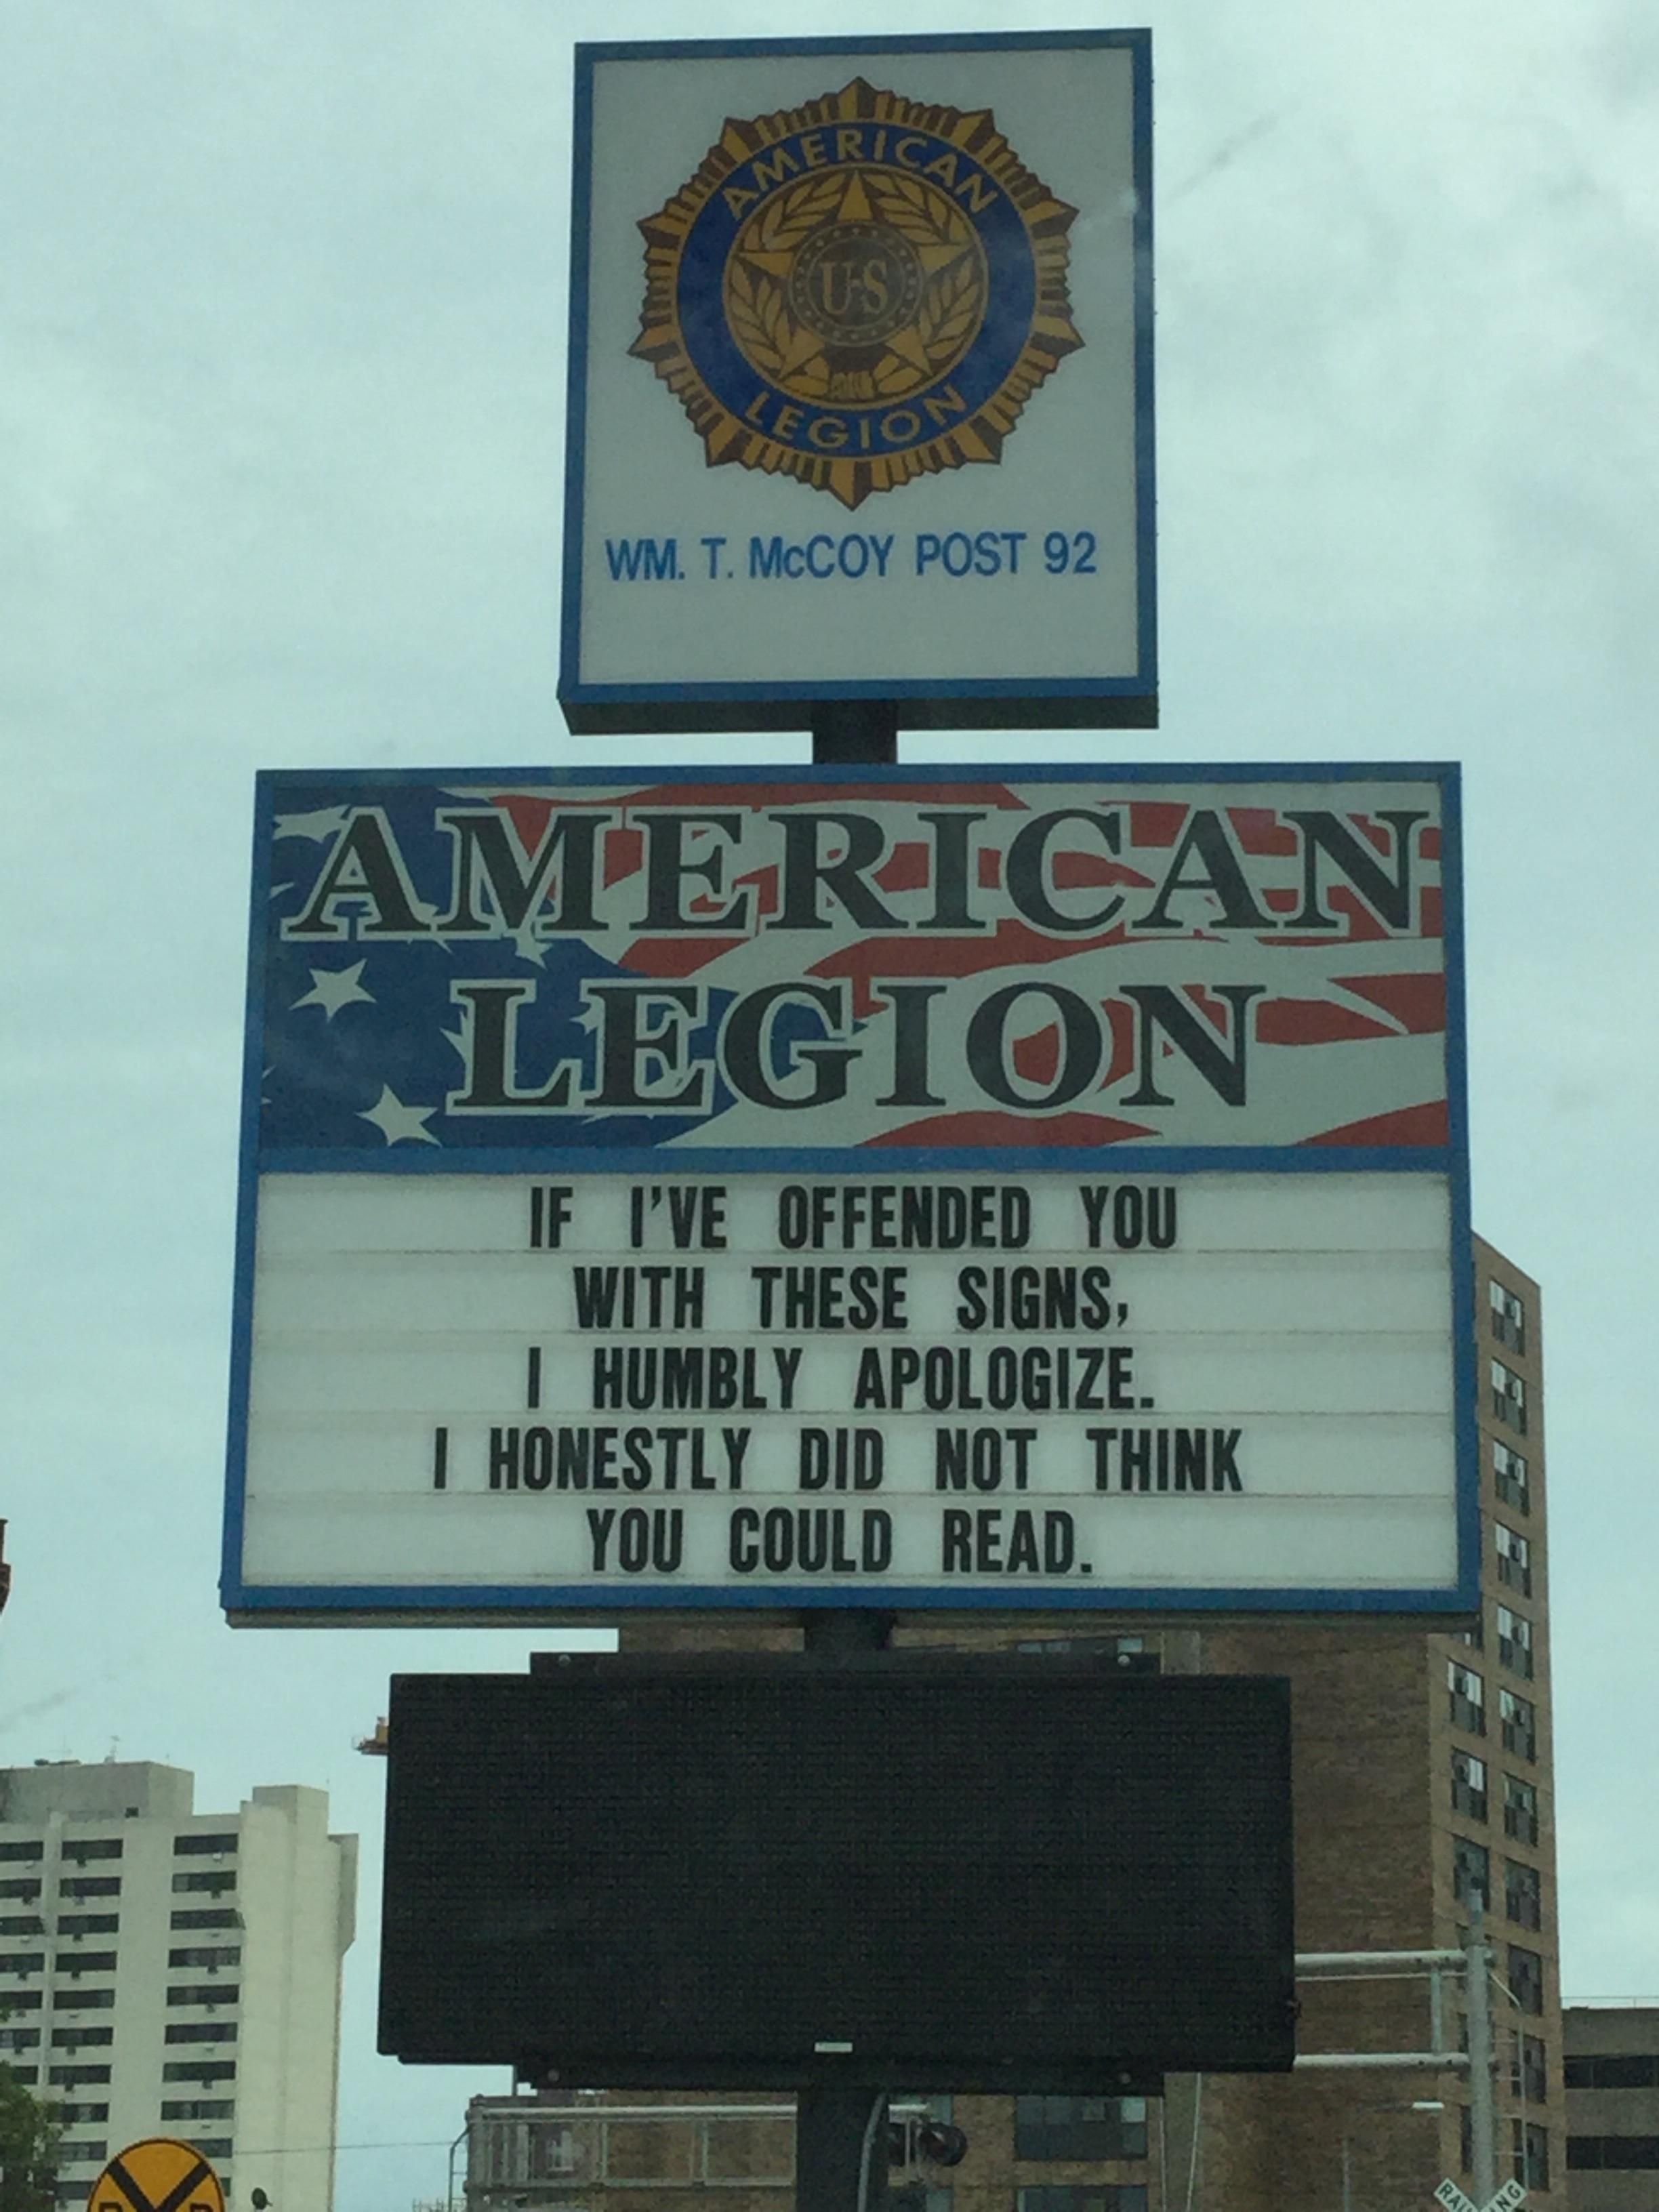 American legion billboard, part 2